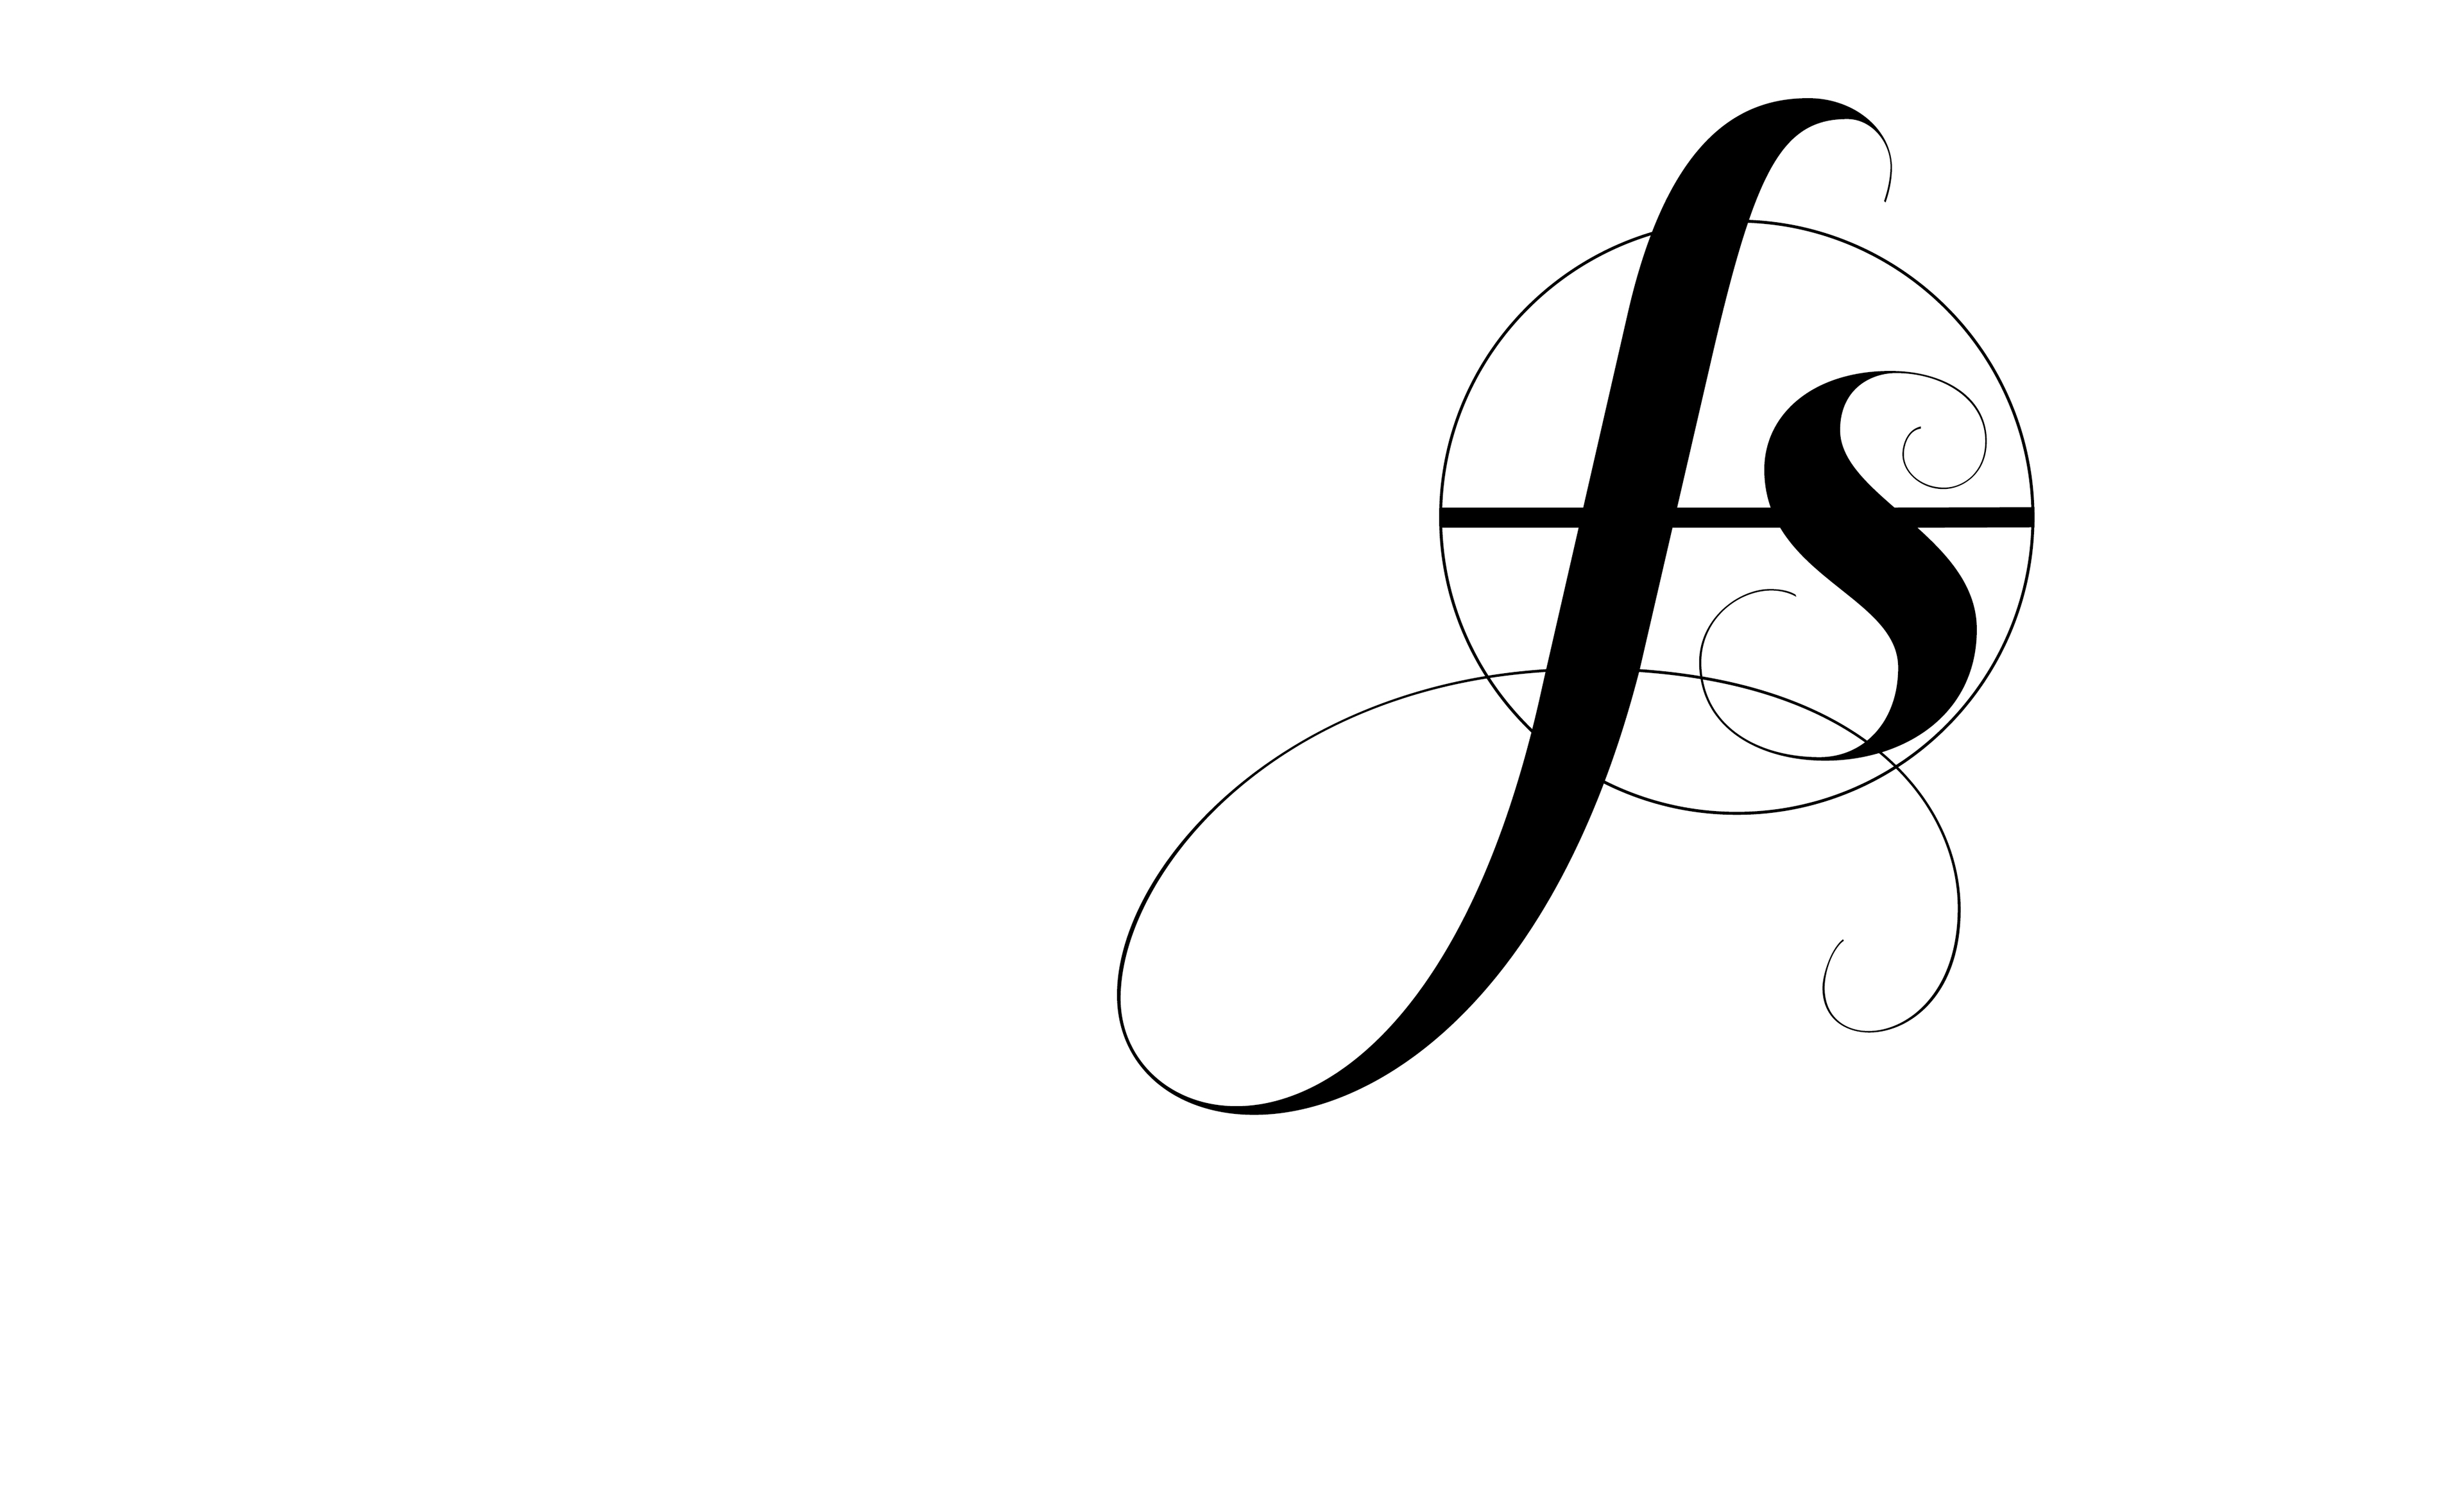 FS буквы. Лого FS. Буква s + f. Аватарка с буквами FS. S f co